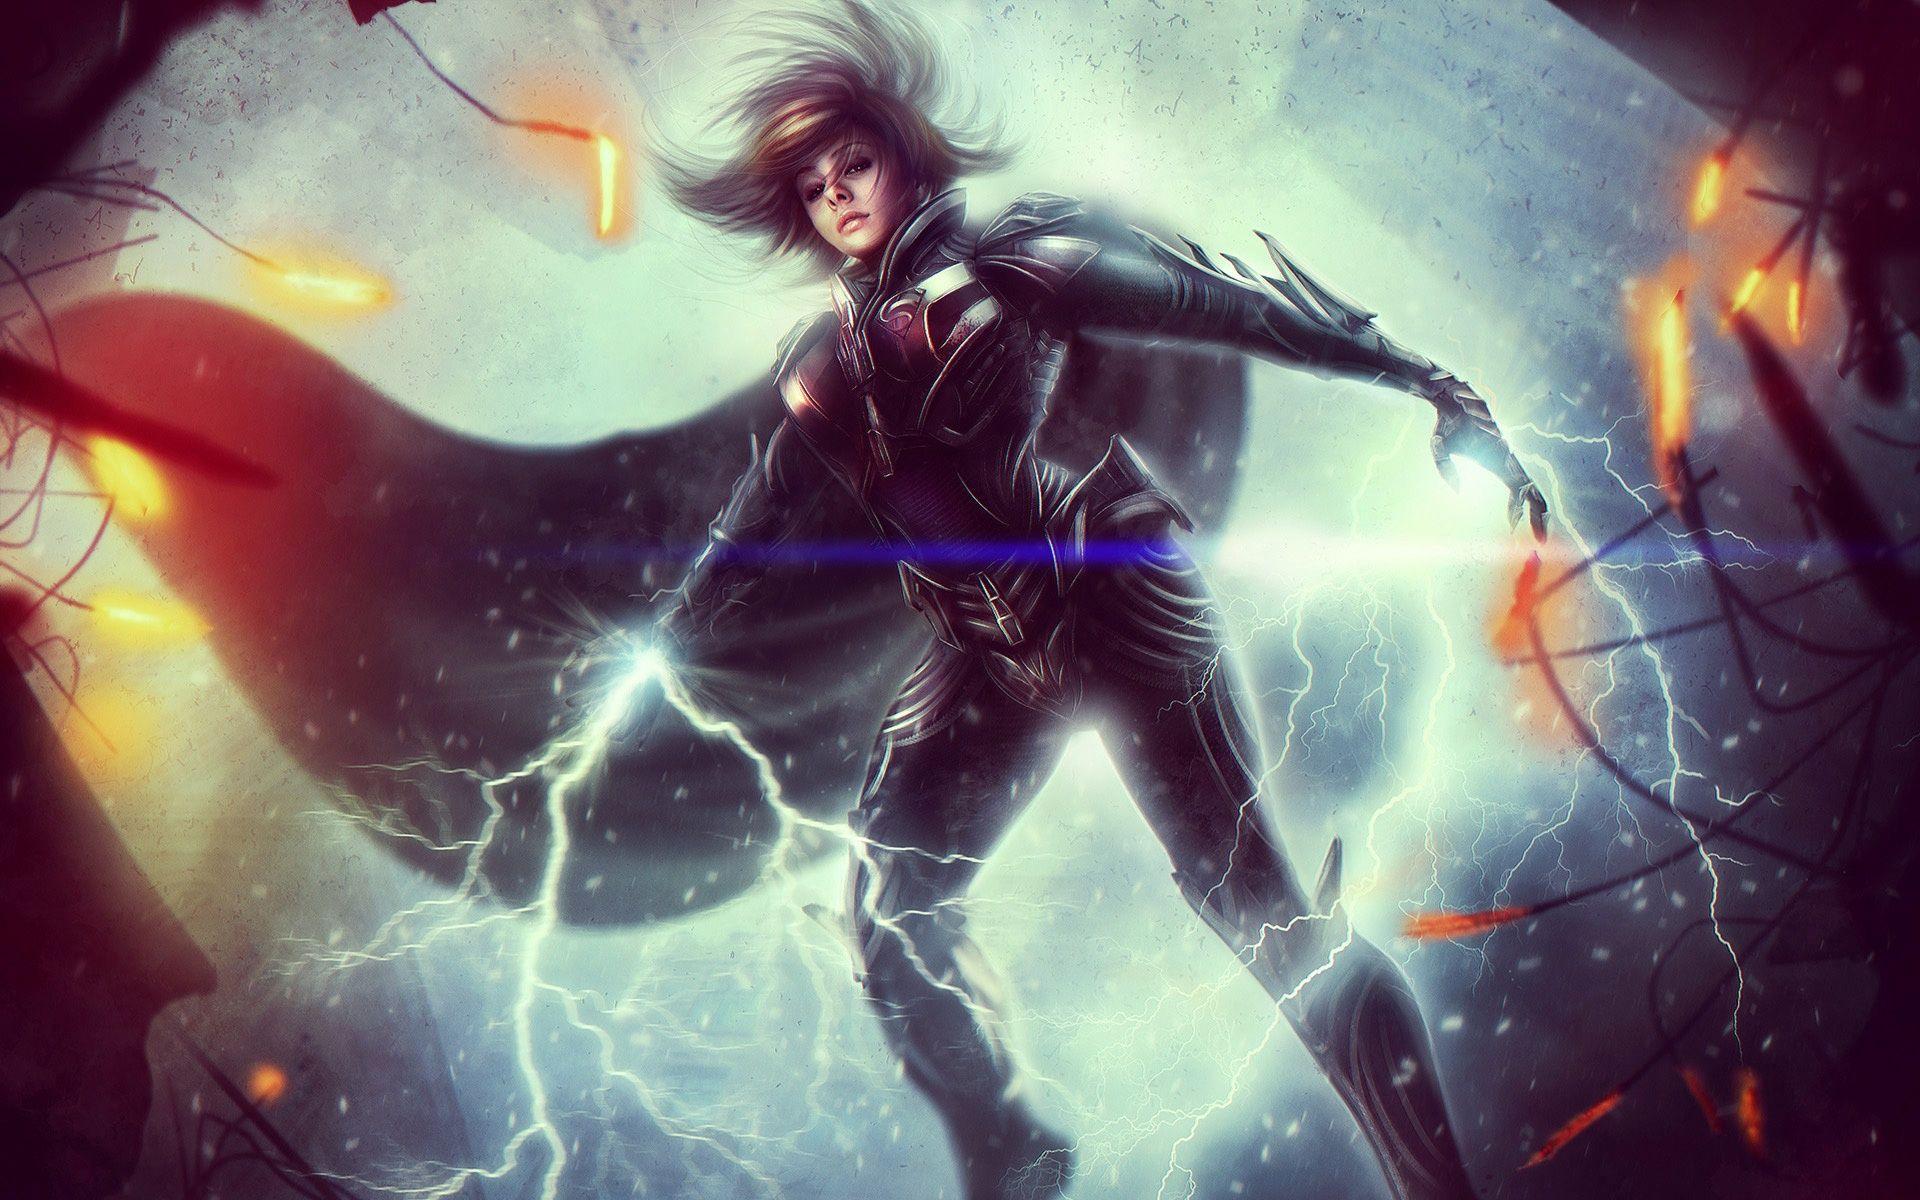 Kyla DC Universe Online Wallpaper in jpg format for free download